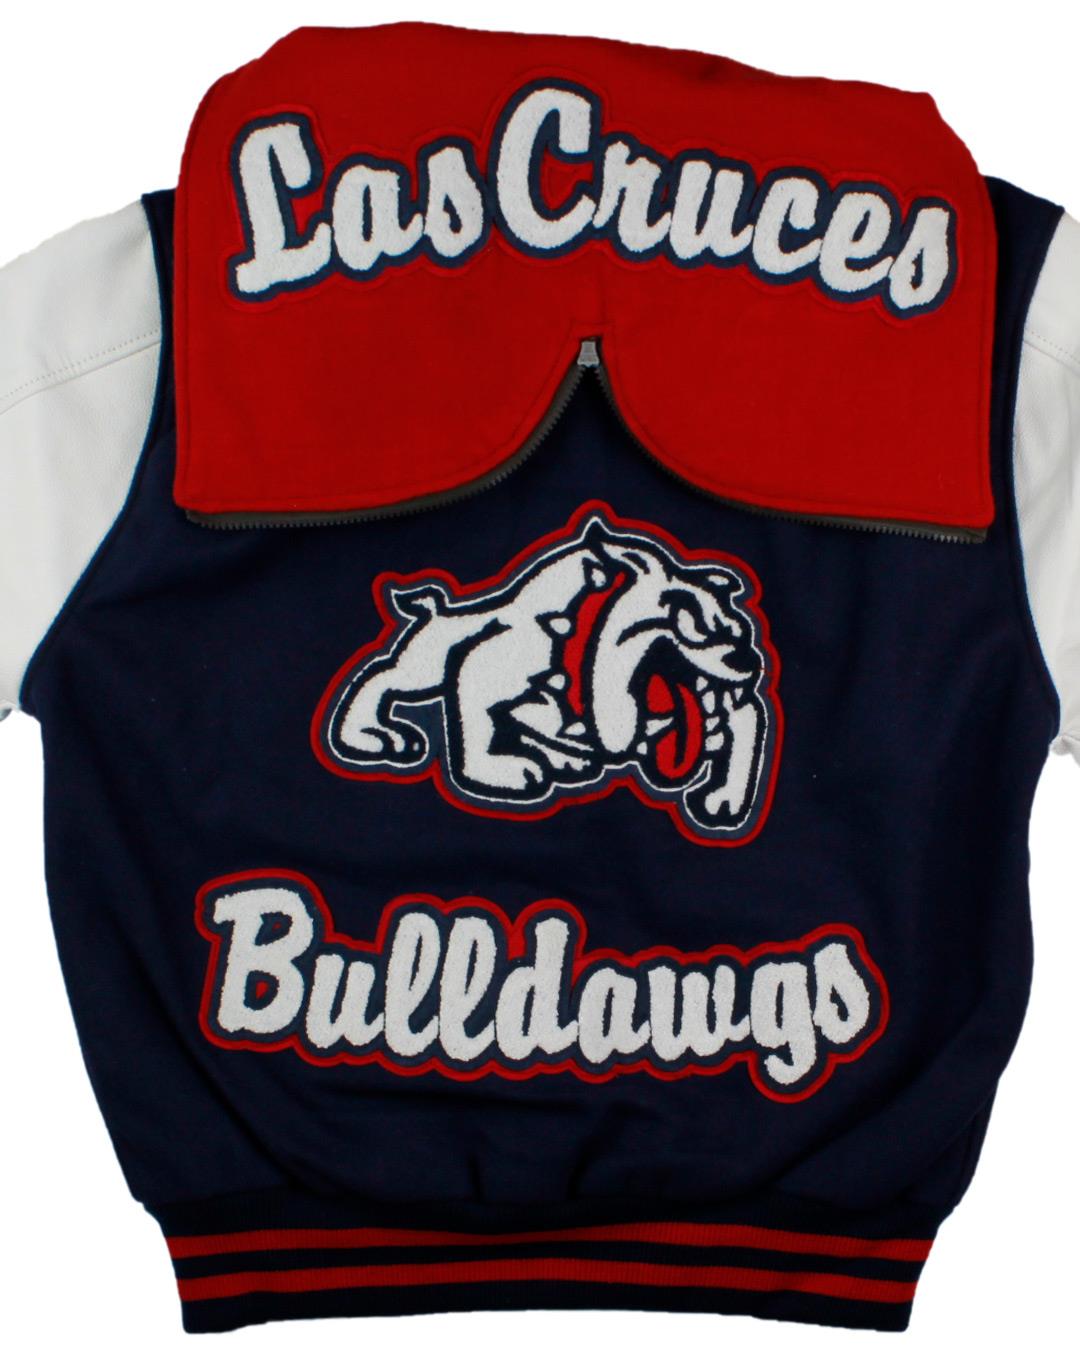 Las Cruces High School Letter Jacket, Las Cruces, NM  - Back